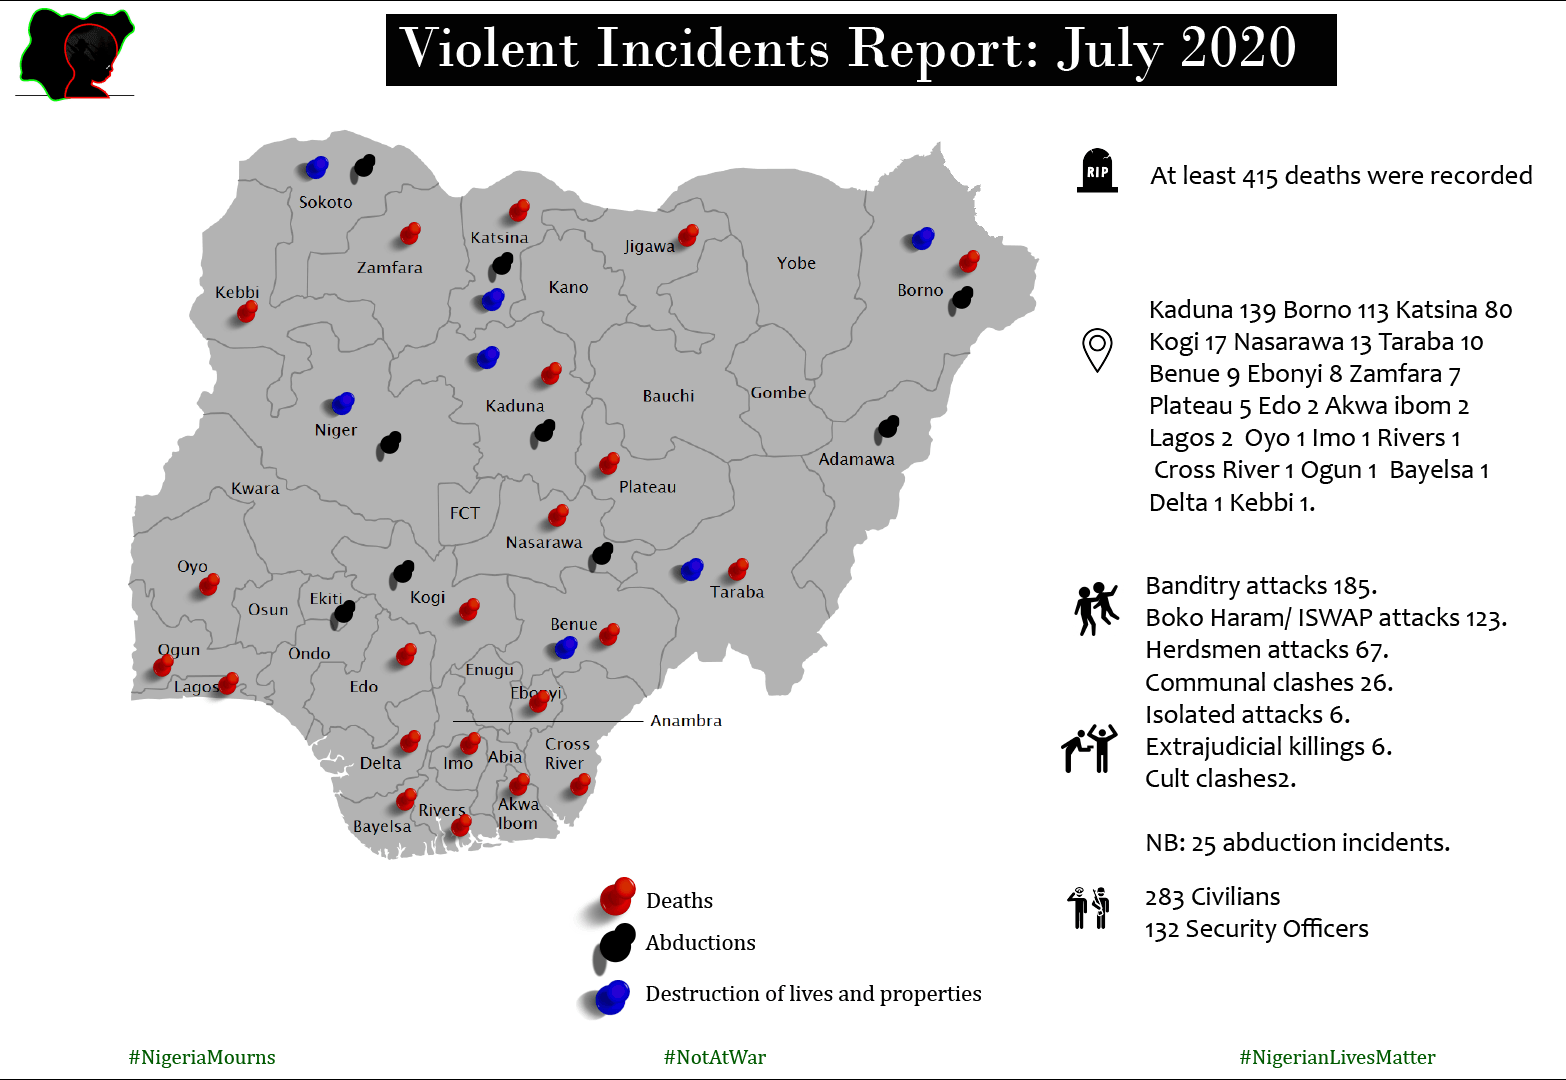 Mass Atrocities Casualties Report for July 2020